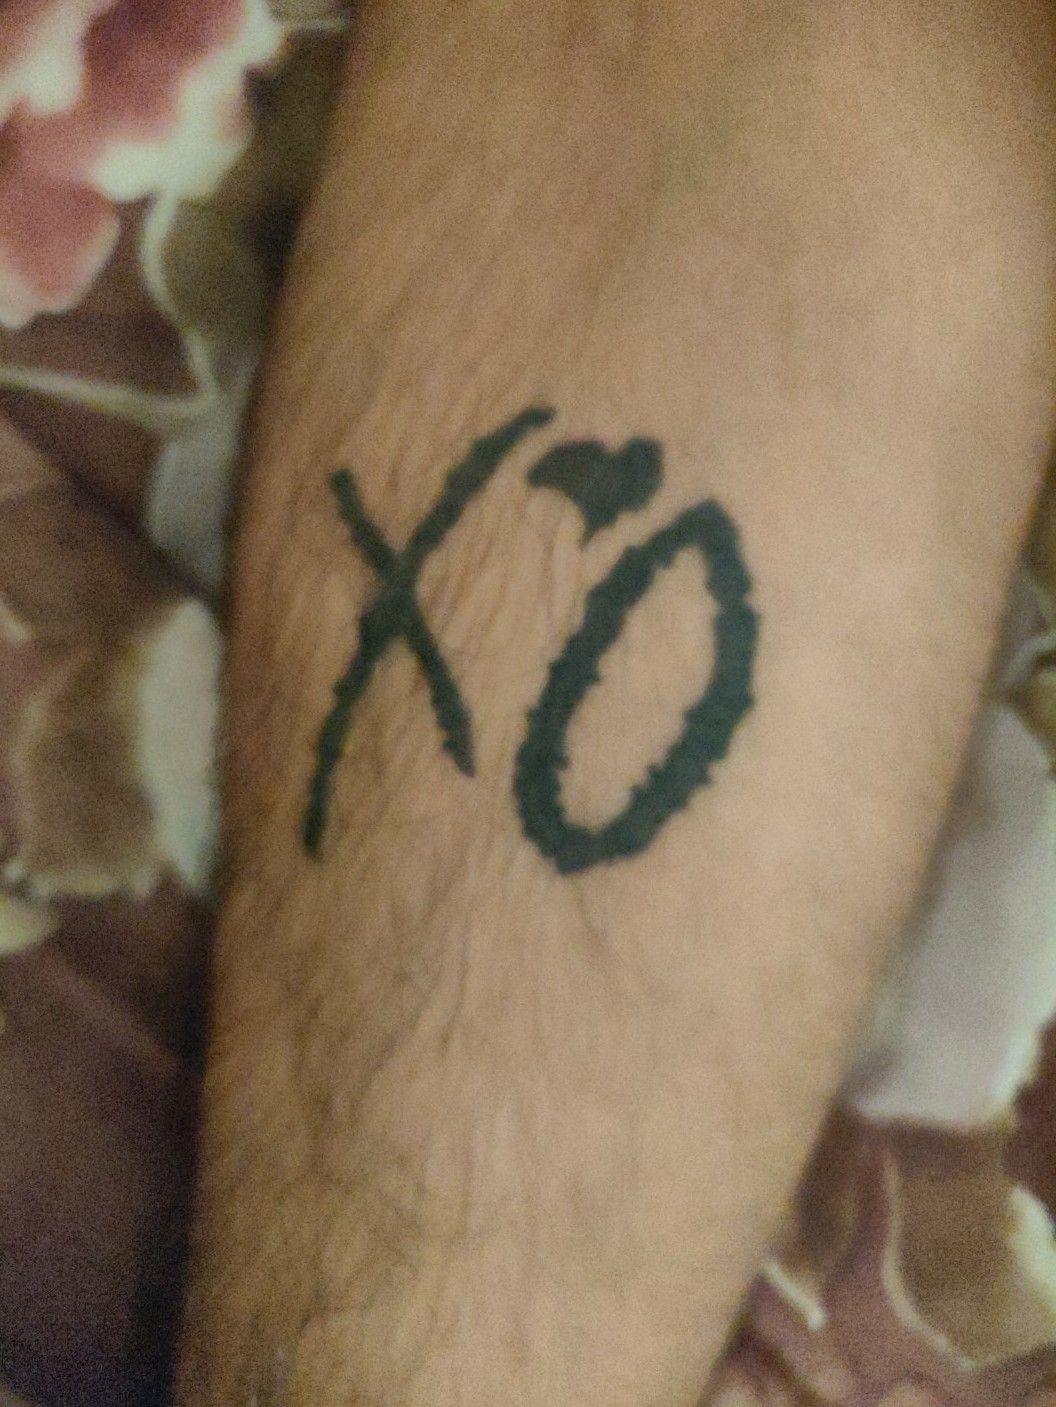 Kennadi Gardenhire on Twitter Finally got my The Weeknd inspired tattoo  and I couldnt be happier  httpstcoEZbeI1G4Dp  Twitter